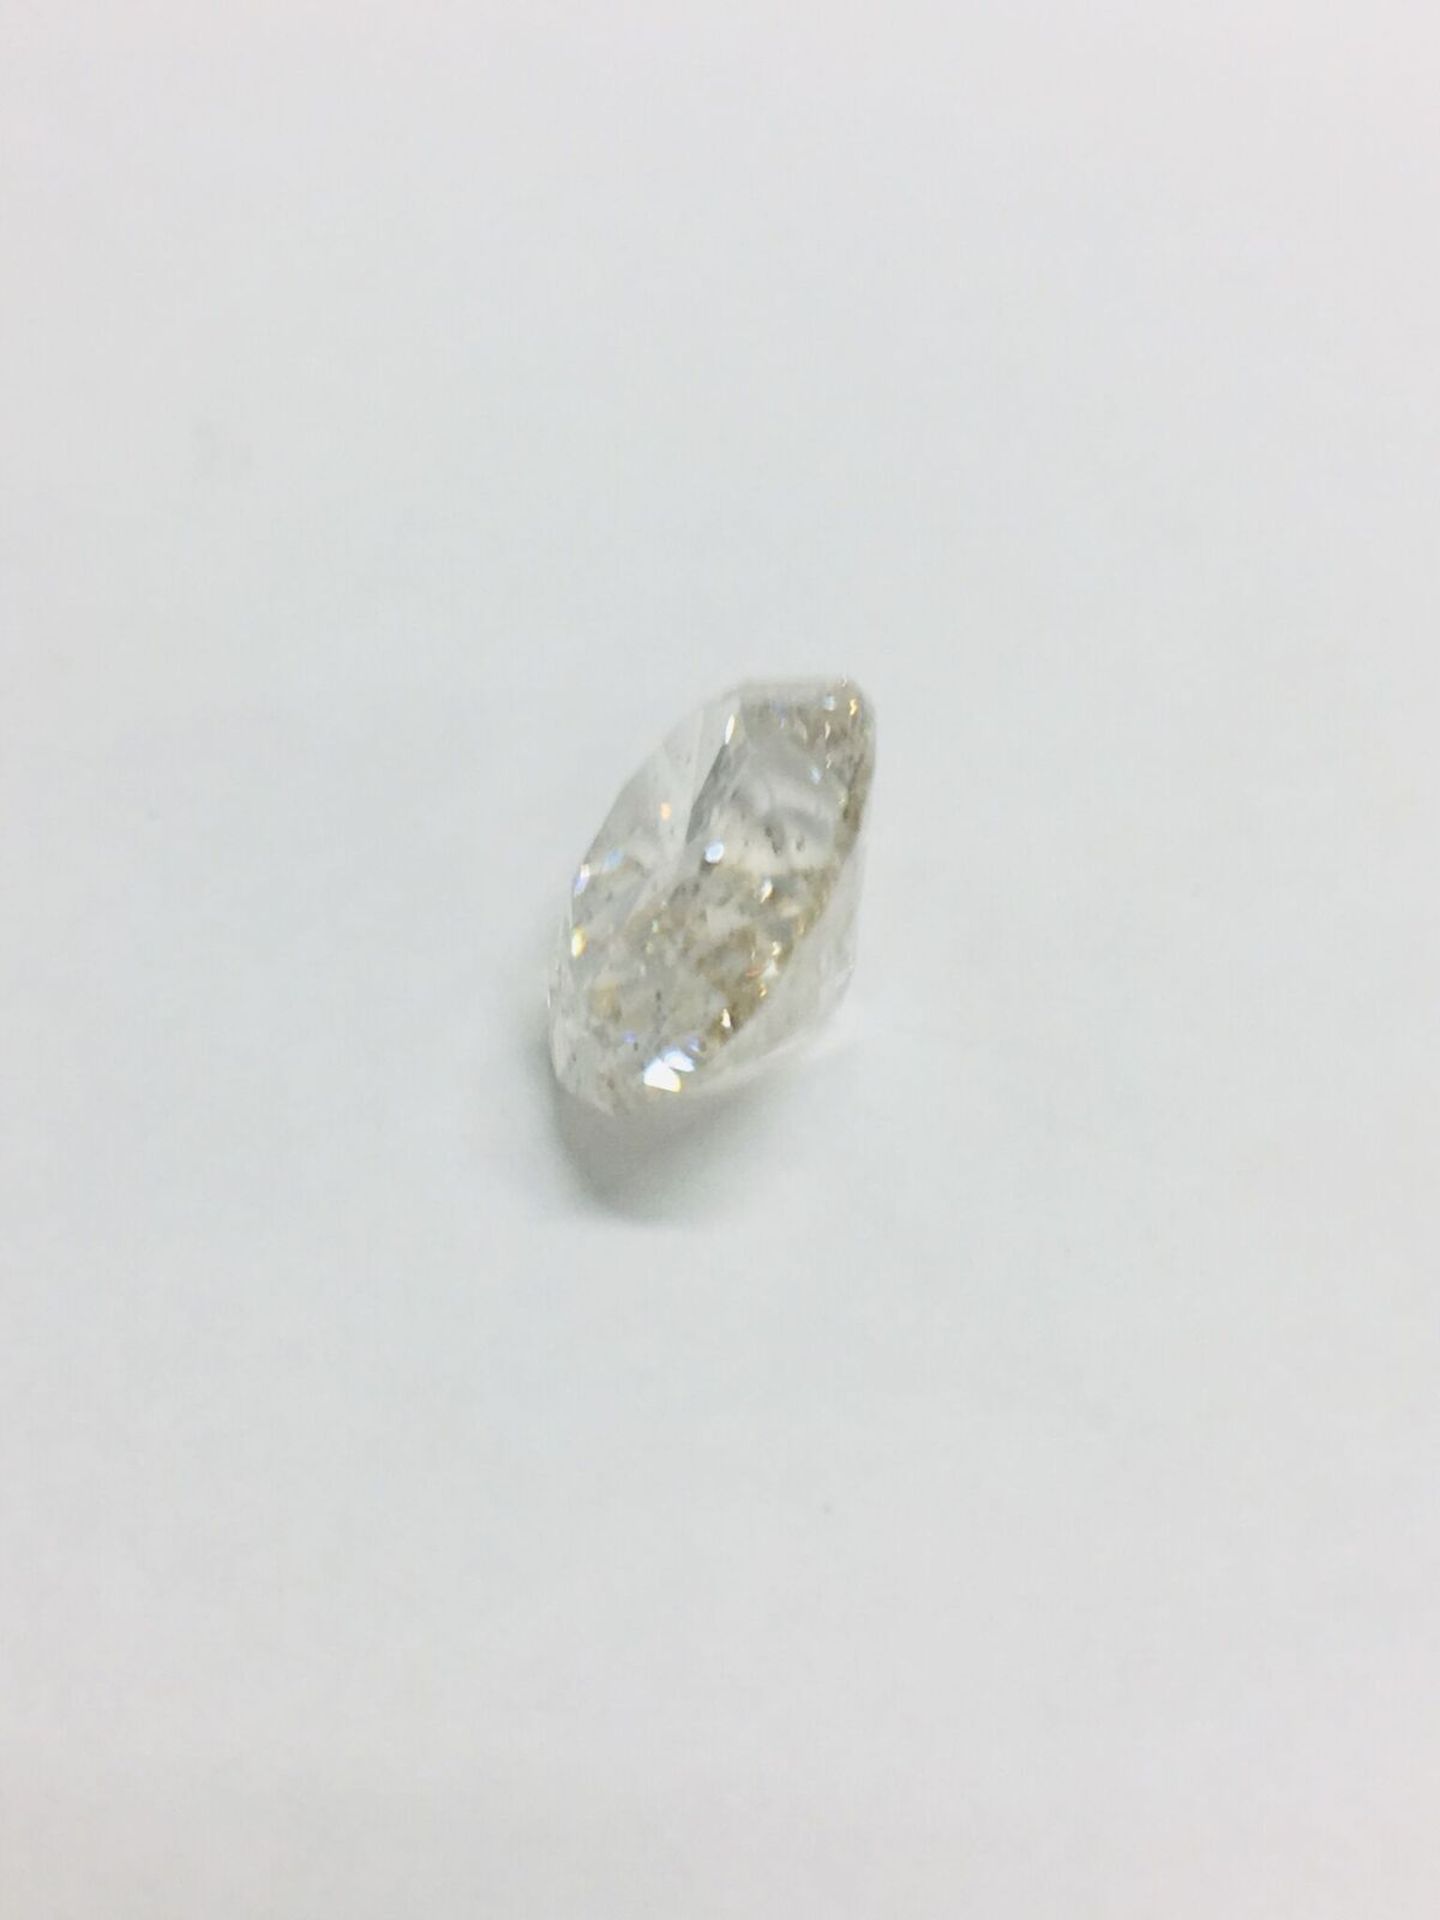 5.54ct Oval Natural Diamond - Image 2 of 4